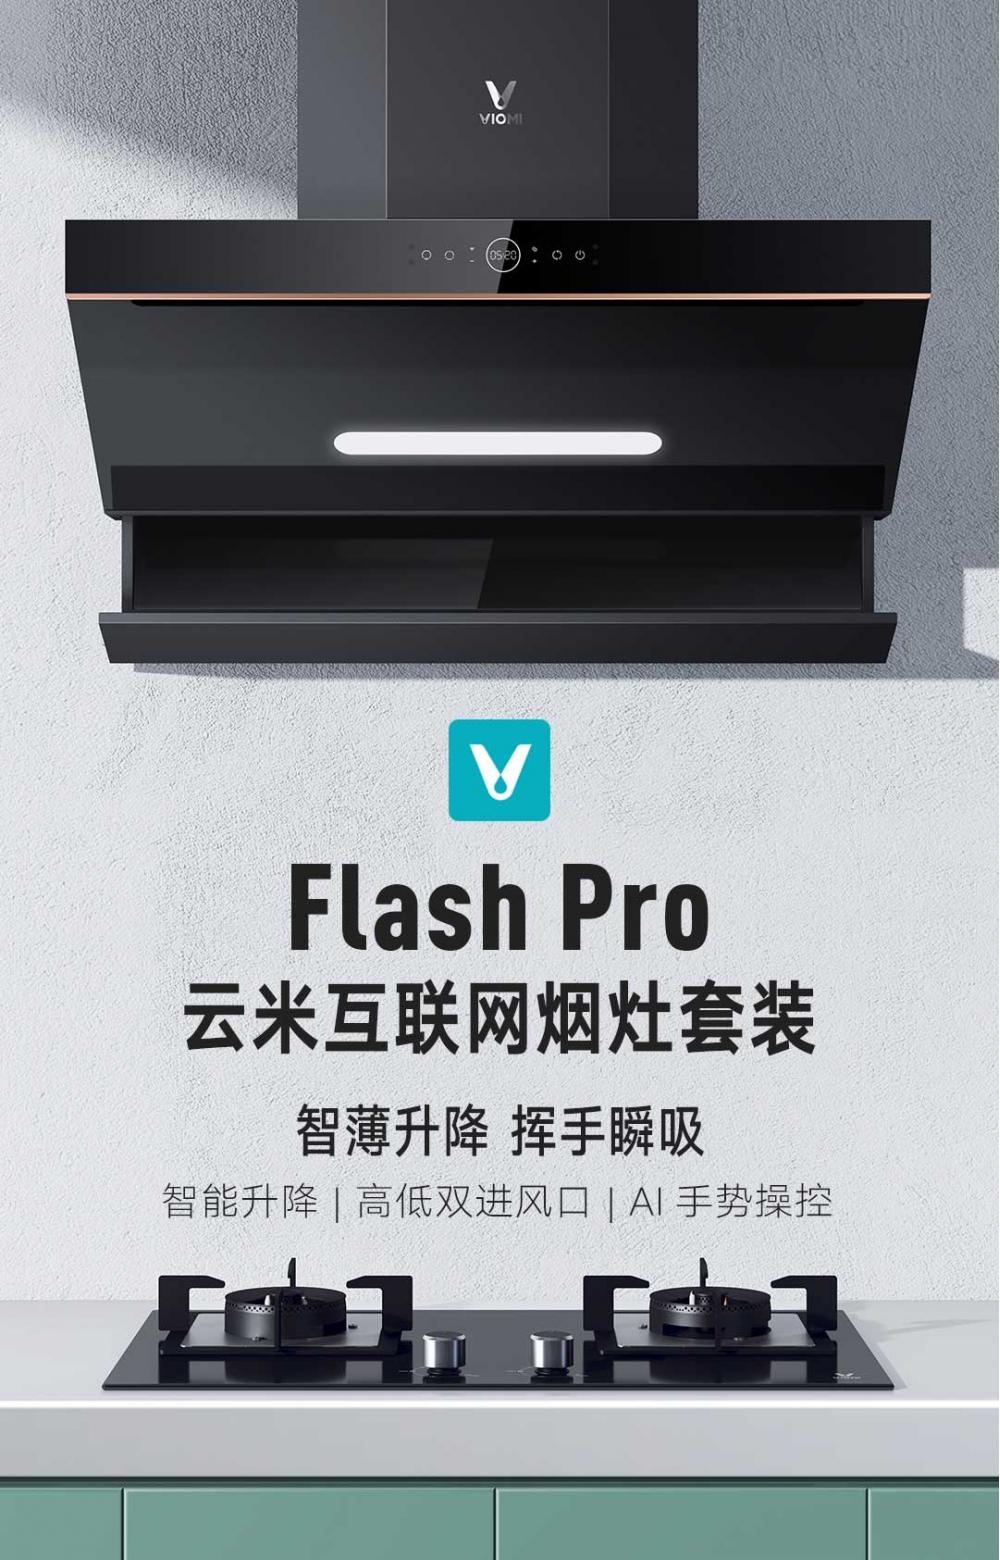 Viomi Flash Pro